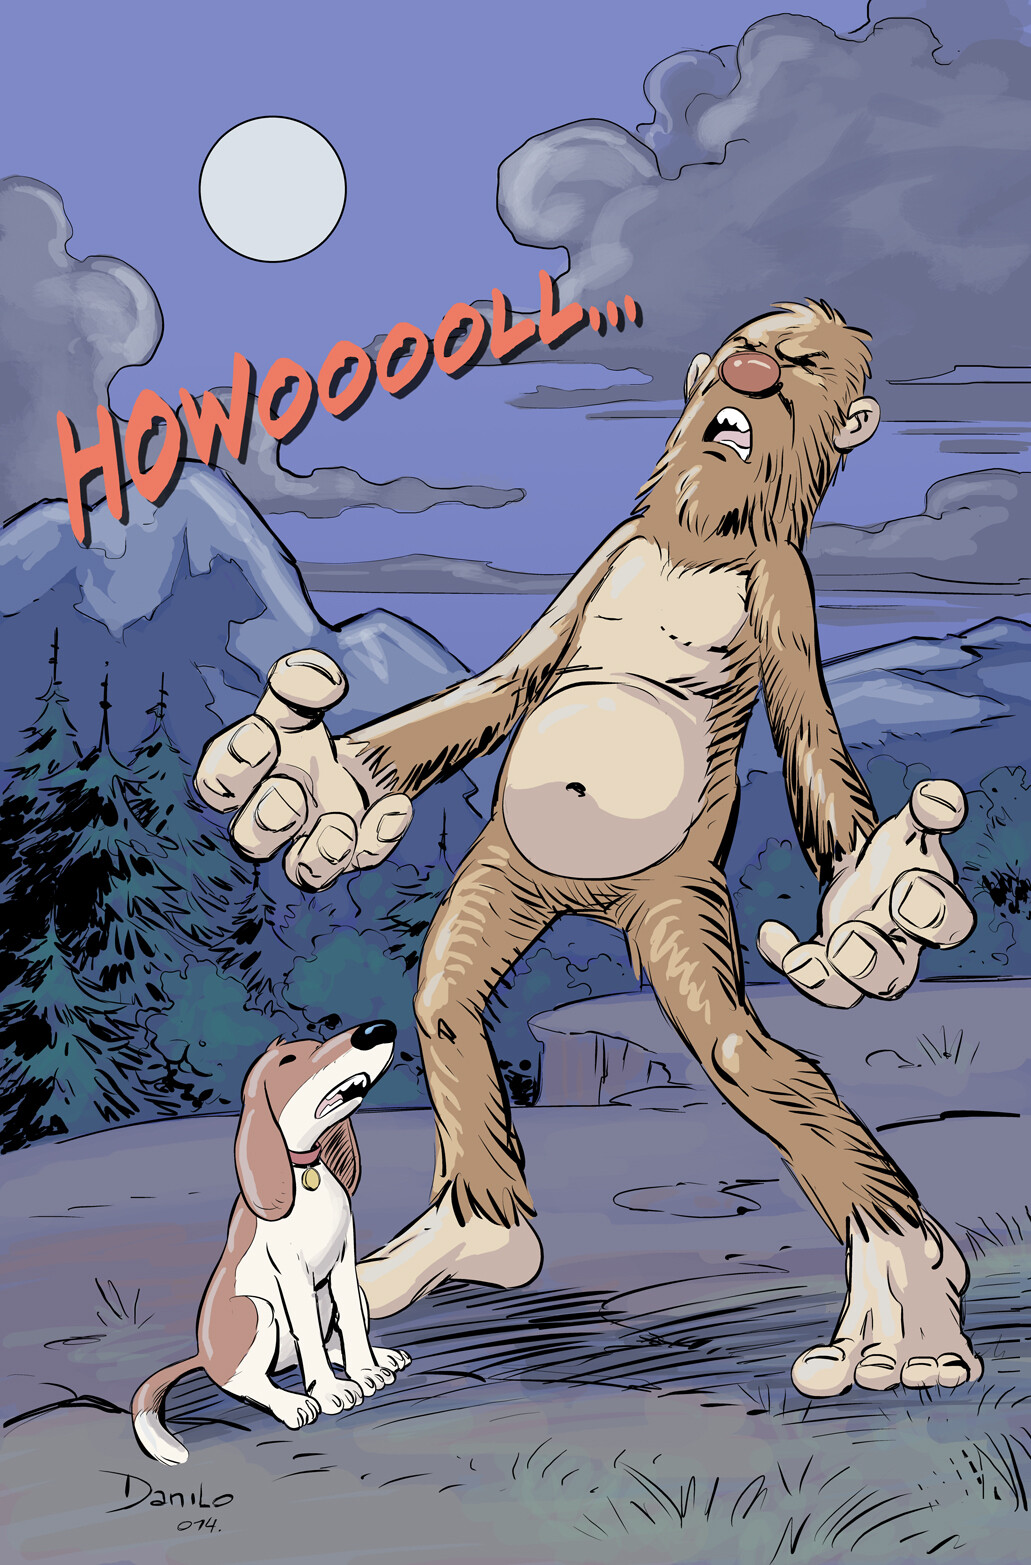 Untold Tales of Bigfoot
Web comic by Vince Dorse.